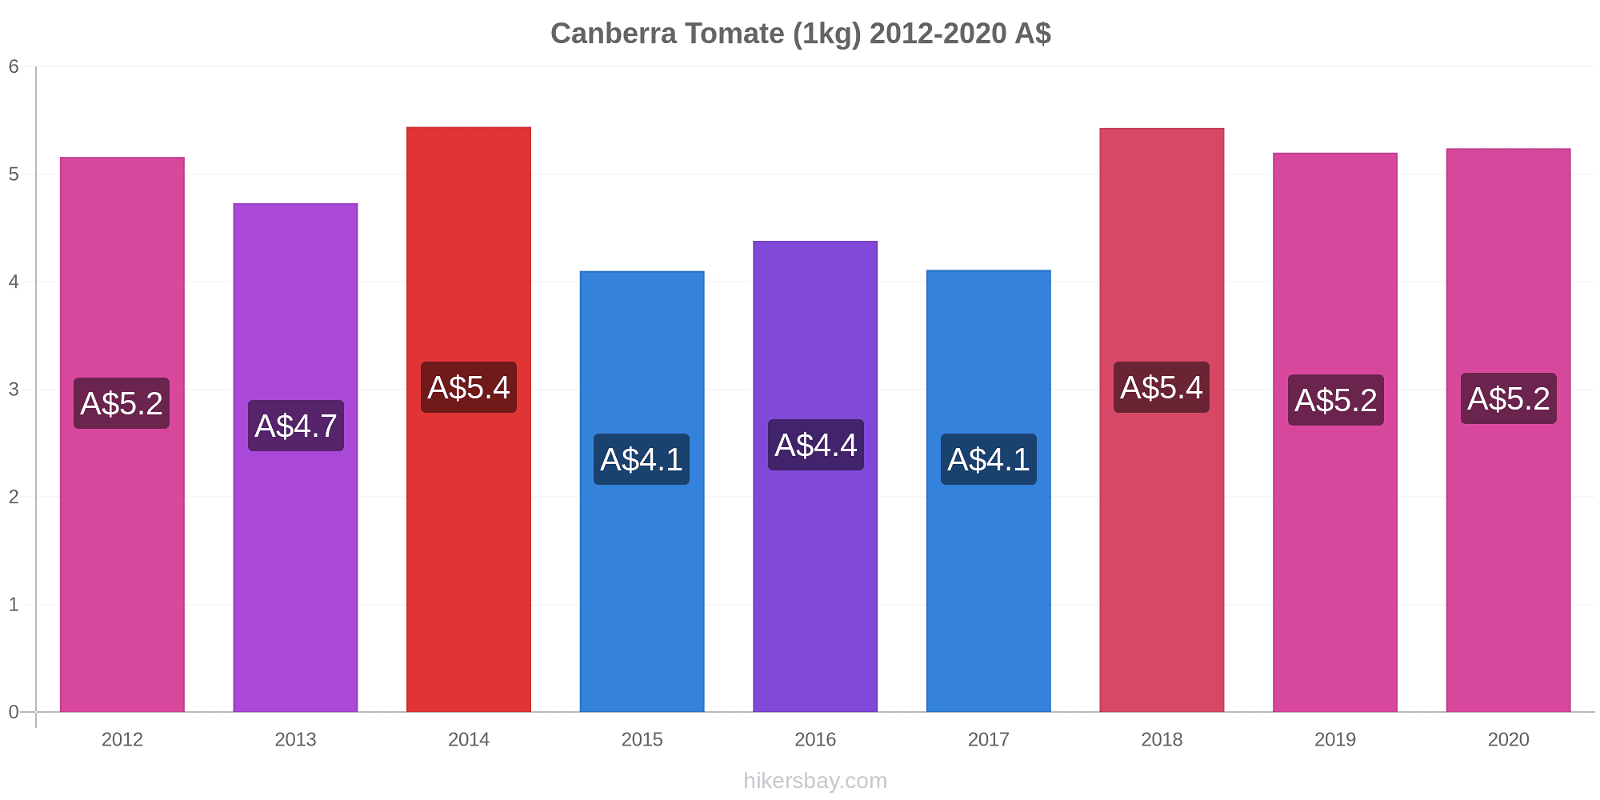 Canberra changements de prix Tomate (1kg) hikersbay.com